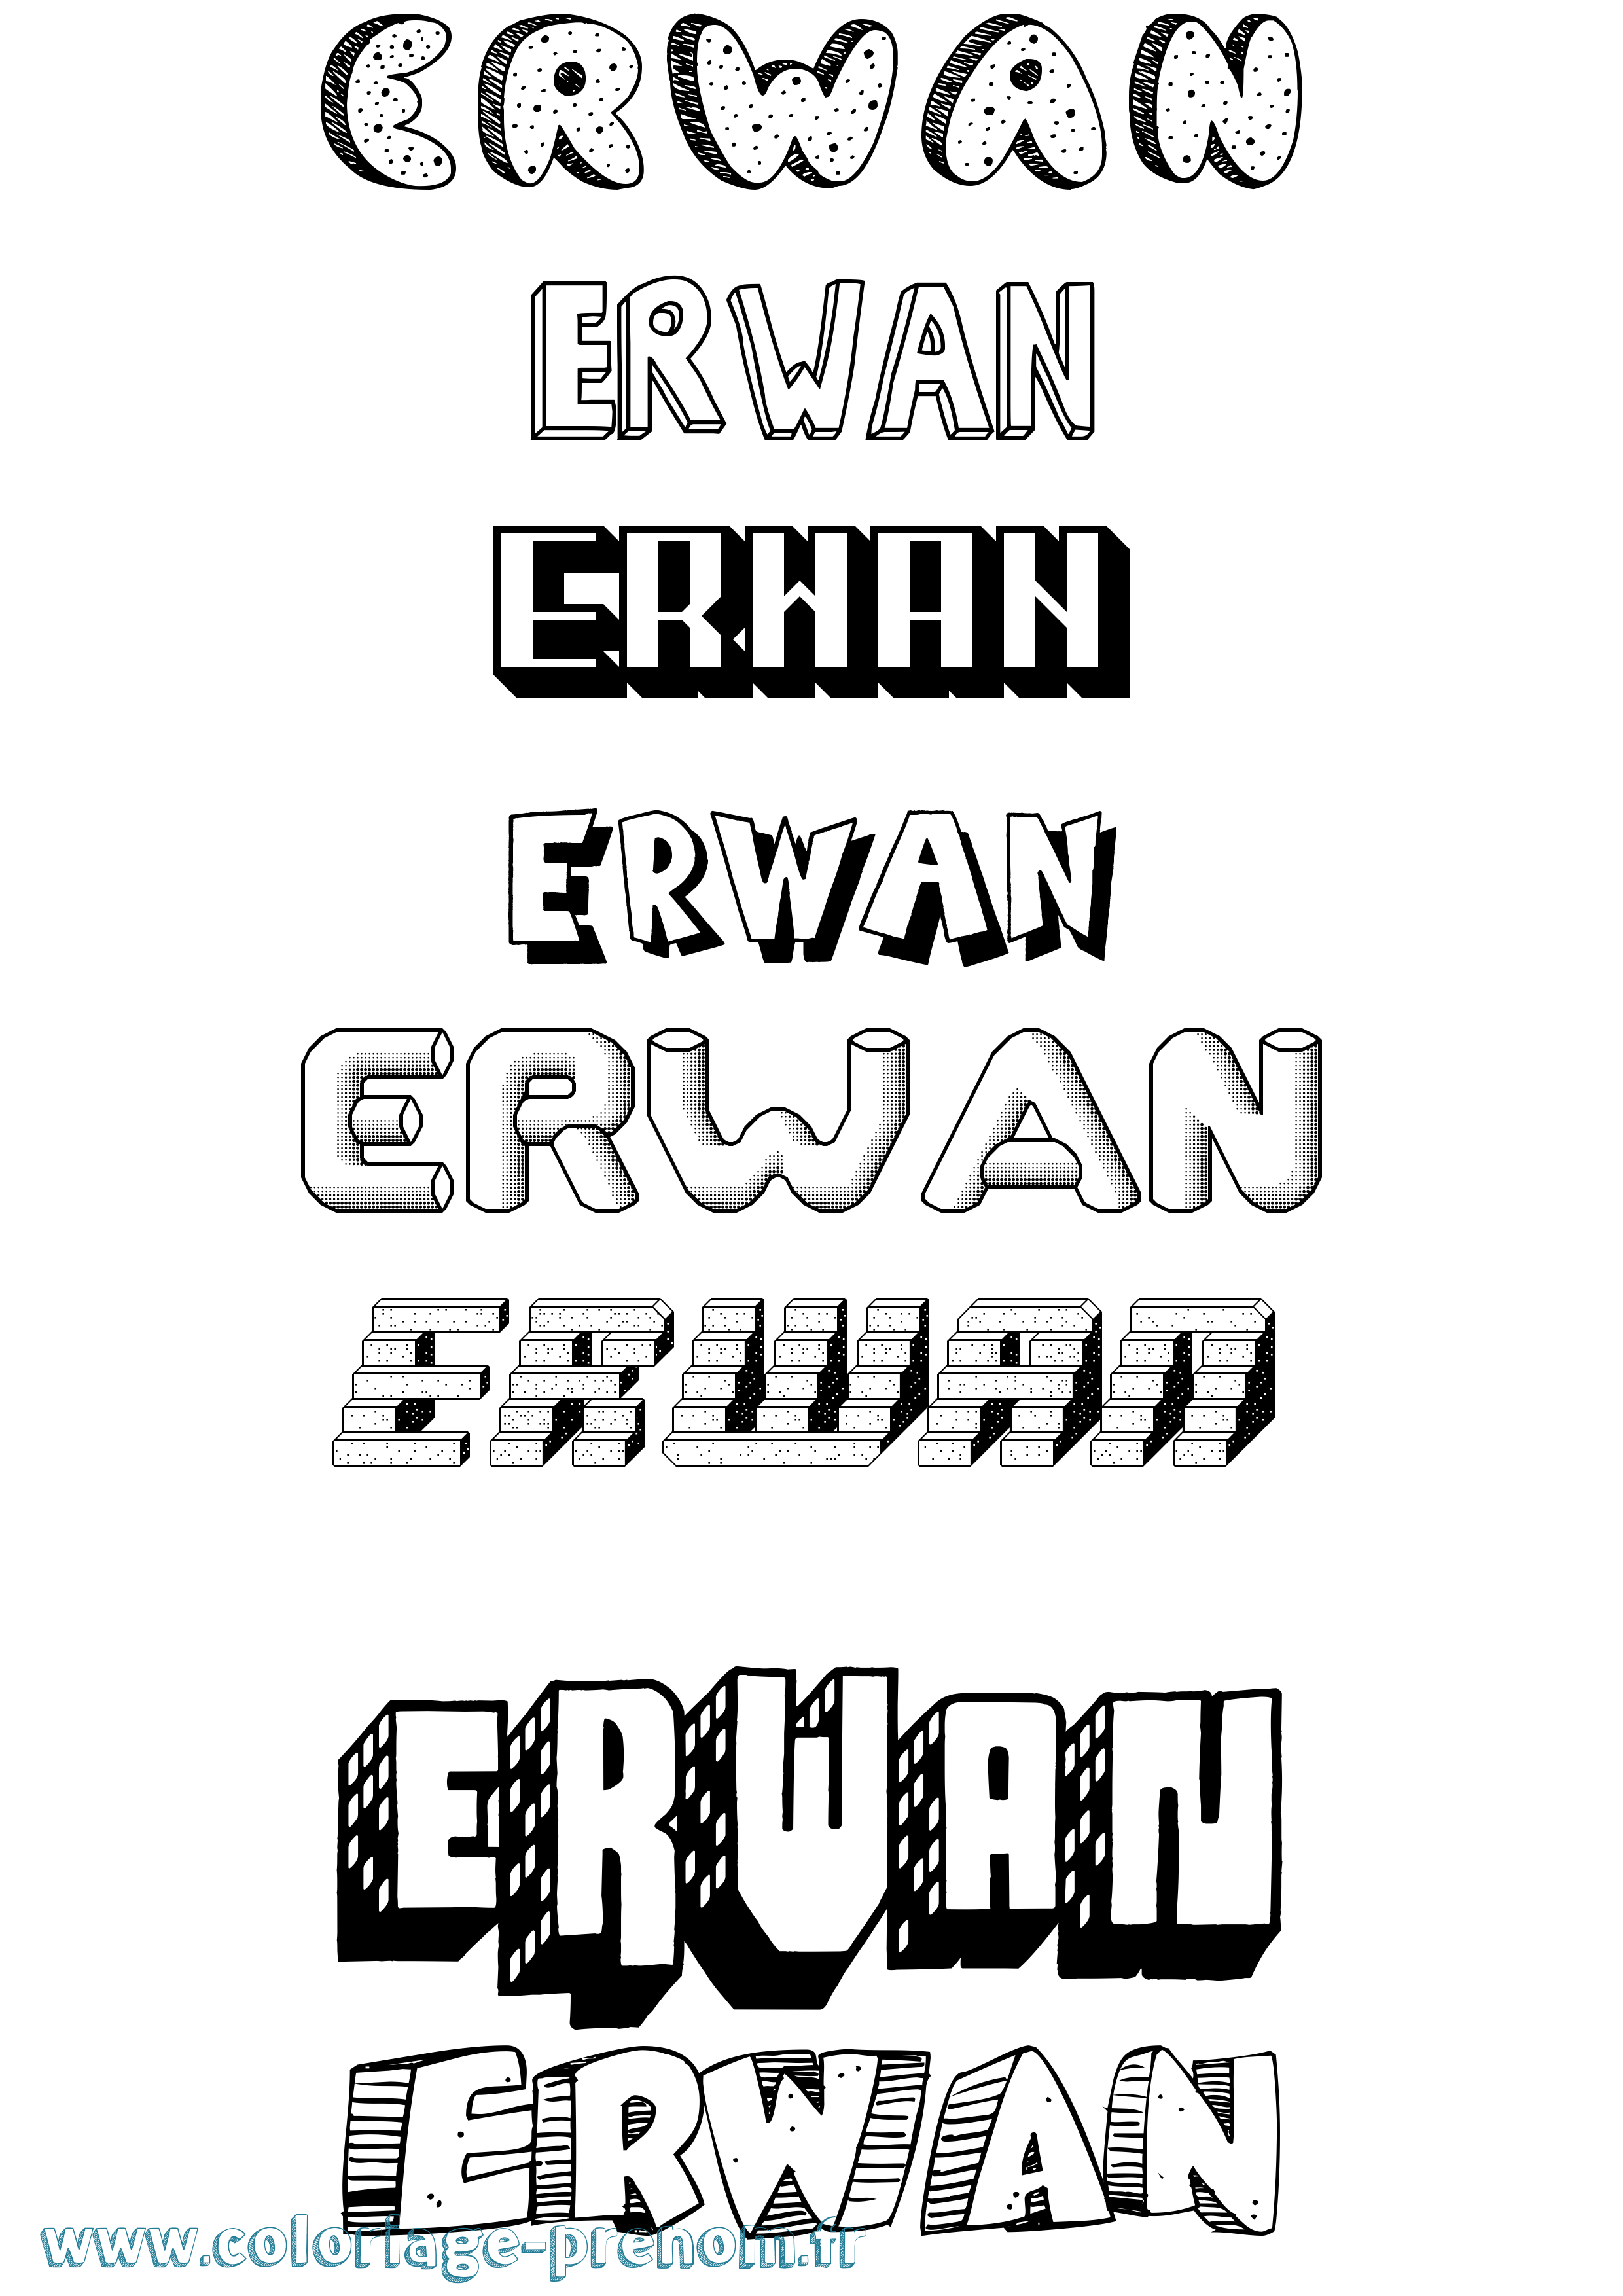 Coloriage prénom Erwan